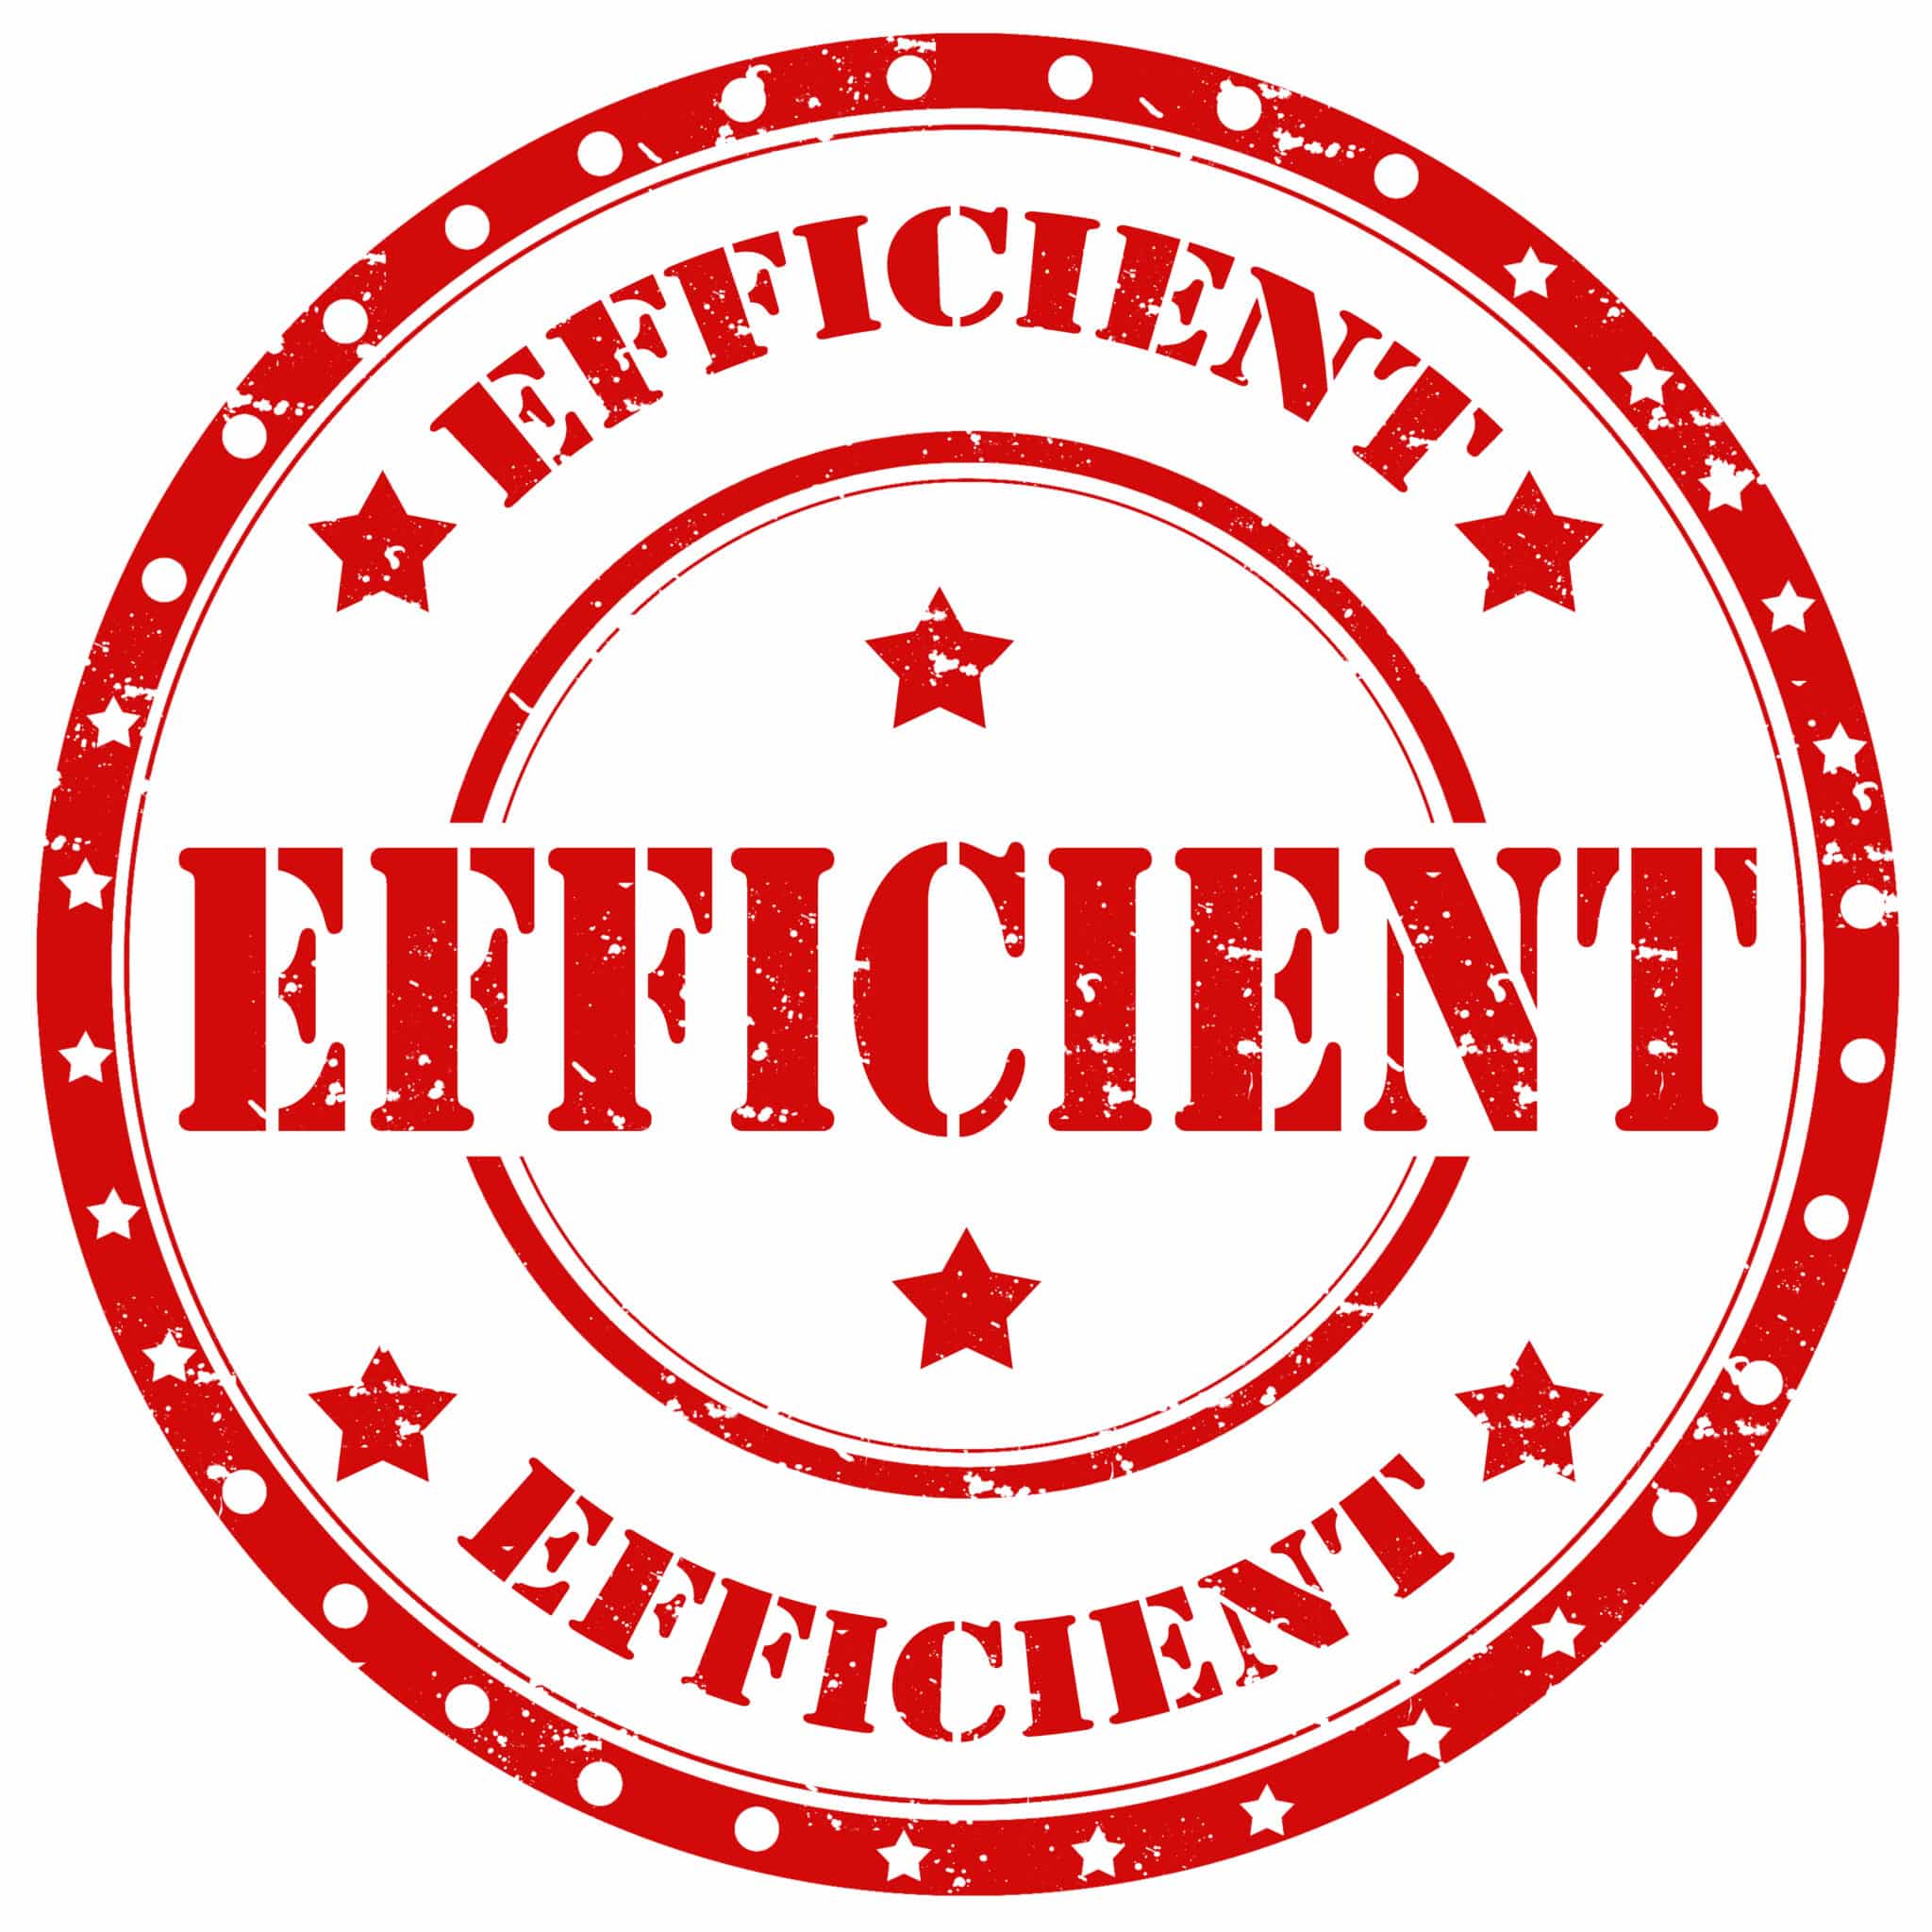 5 Es of Usability: Efficient